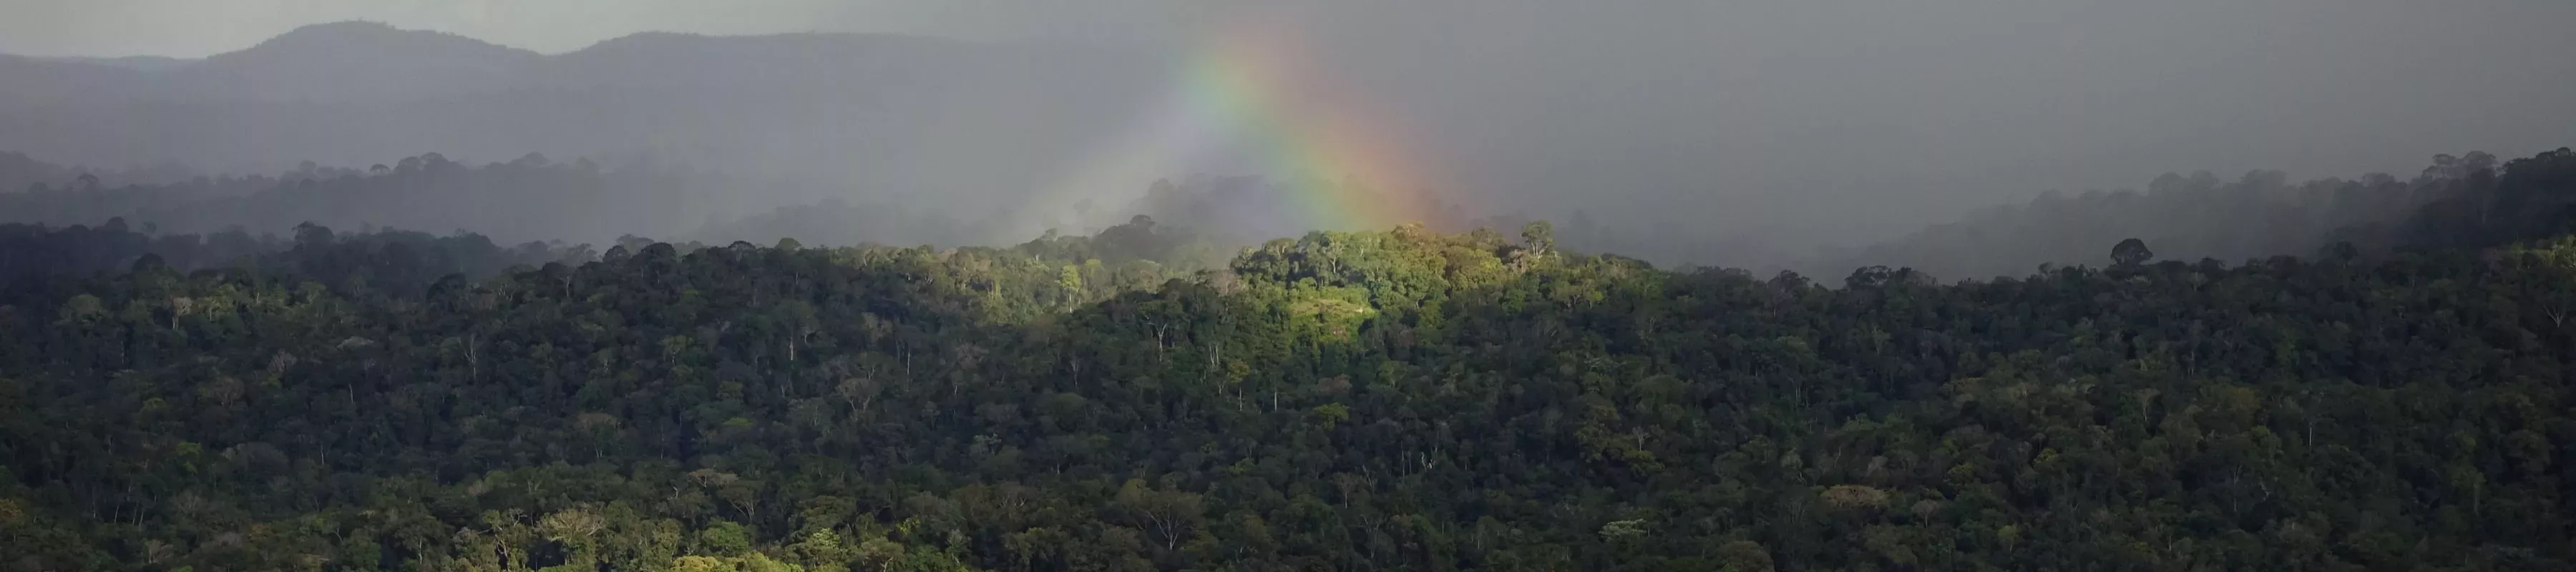 Rainbow over tropical forest